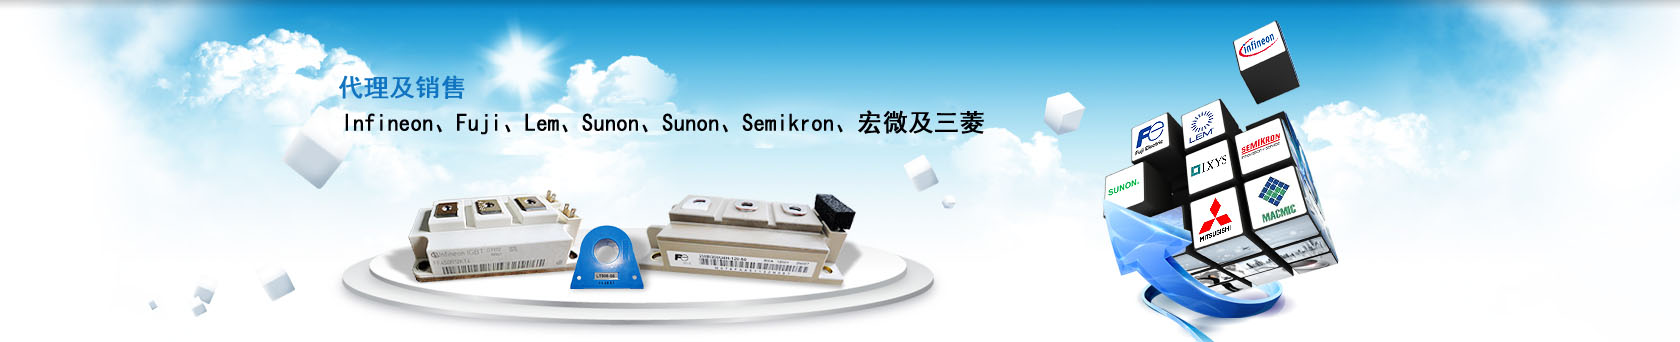 banner4-SUNON，SUNON风扇，SUNON风机，建准风扇，建准风机，建准SUNON授权代理商--武汉新瑞科电气技术有限公司